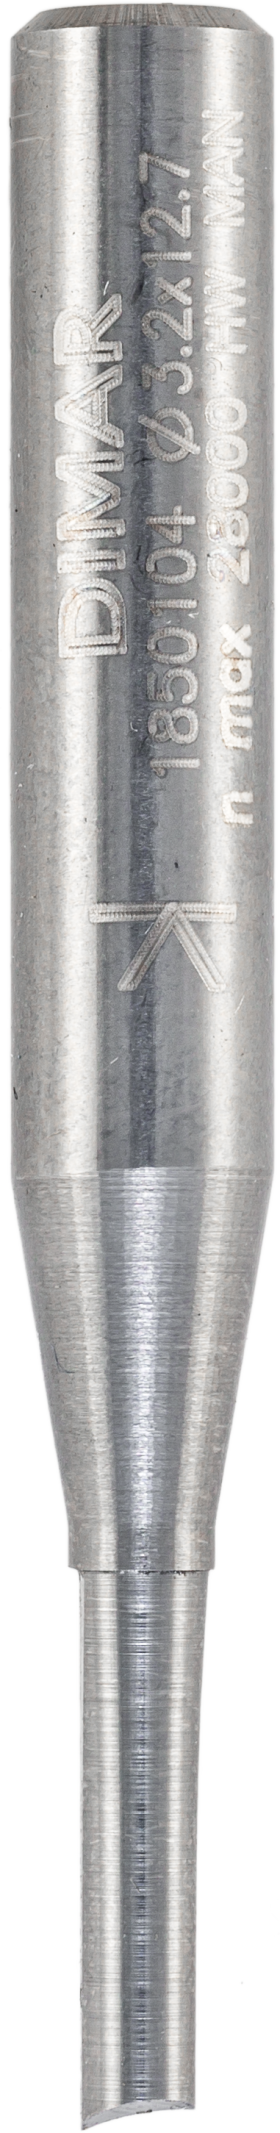 Фреза Dimar 1850104 пазовая O флейта для пластика D3,18x12,75 L50 хвостовик 6,35 зеркальная полировка